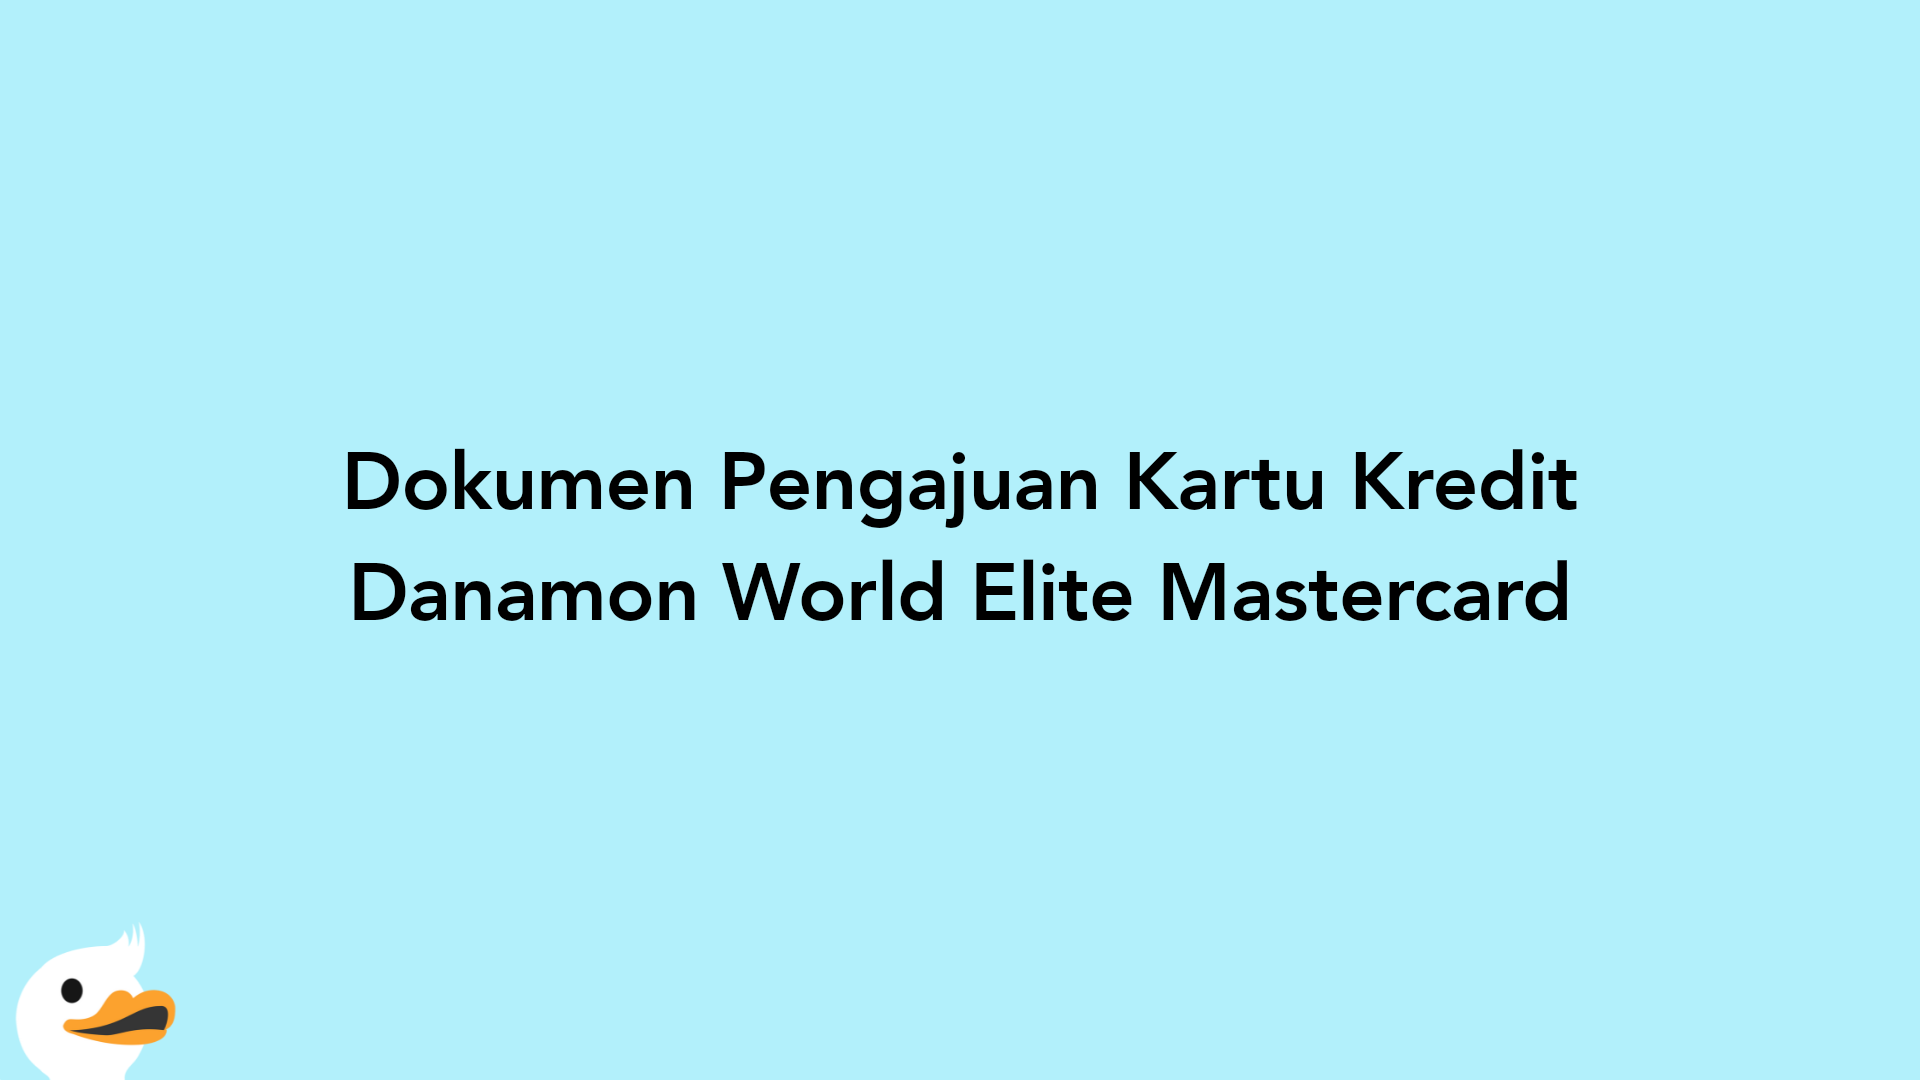 Dokumen Pengajuan Kartu Kredit Danamon World Elite Mastercard